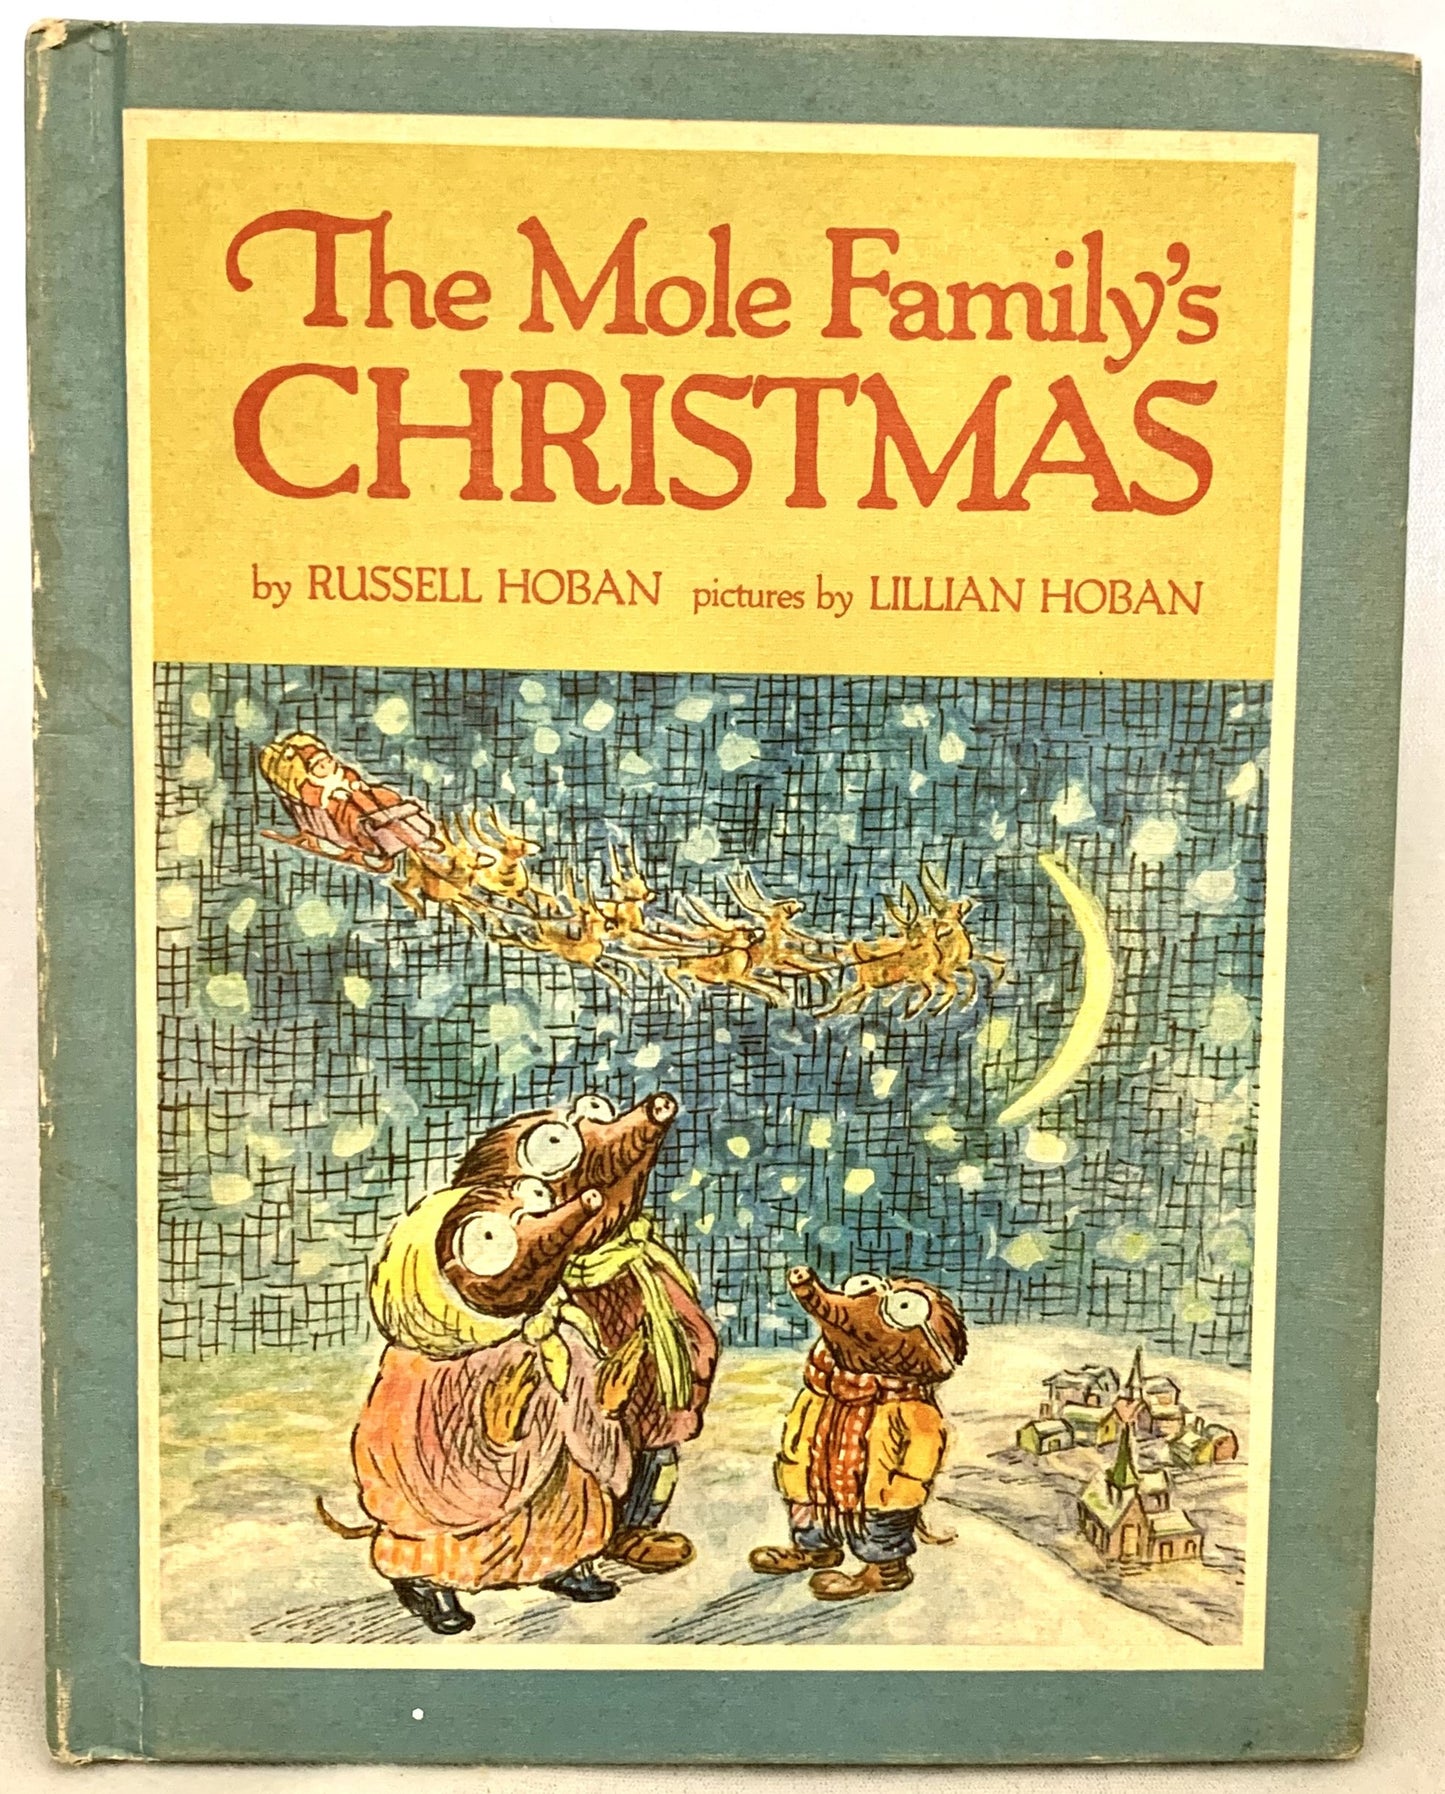 The Mole Family's Christmas